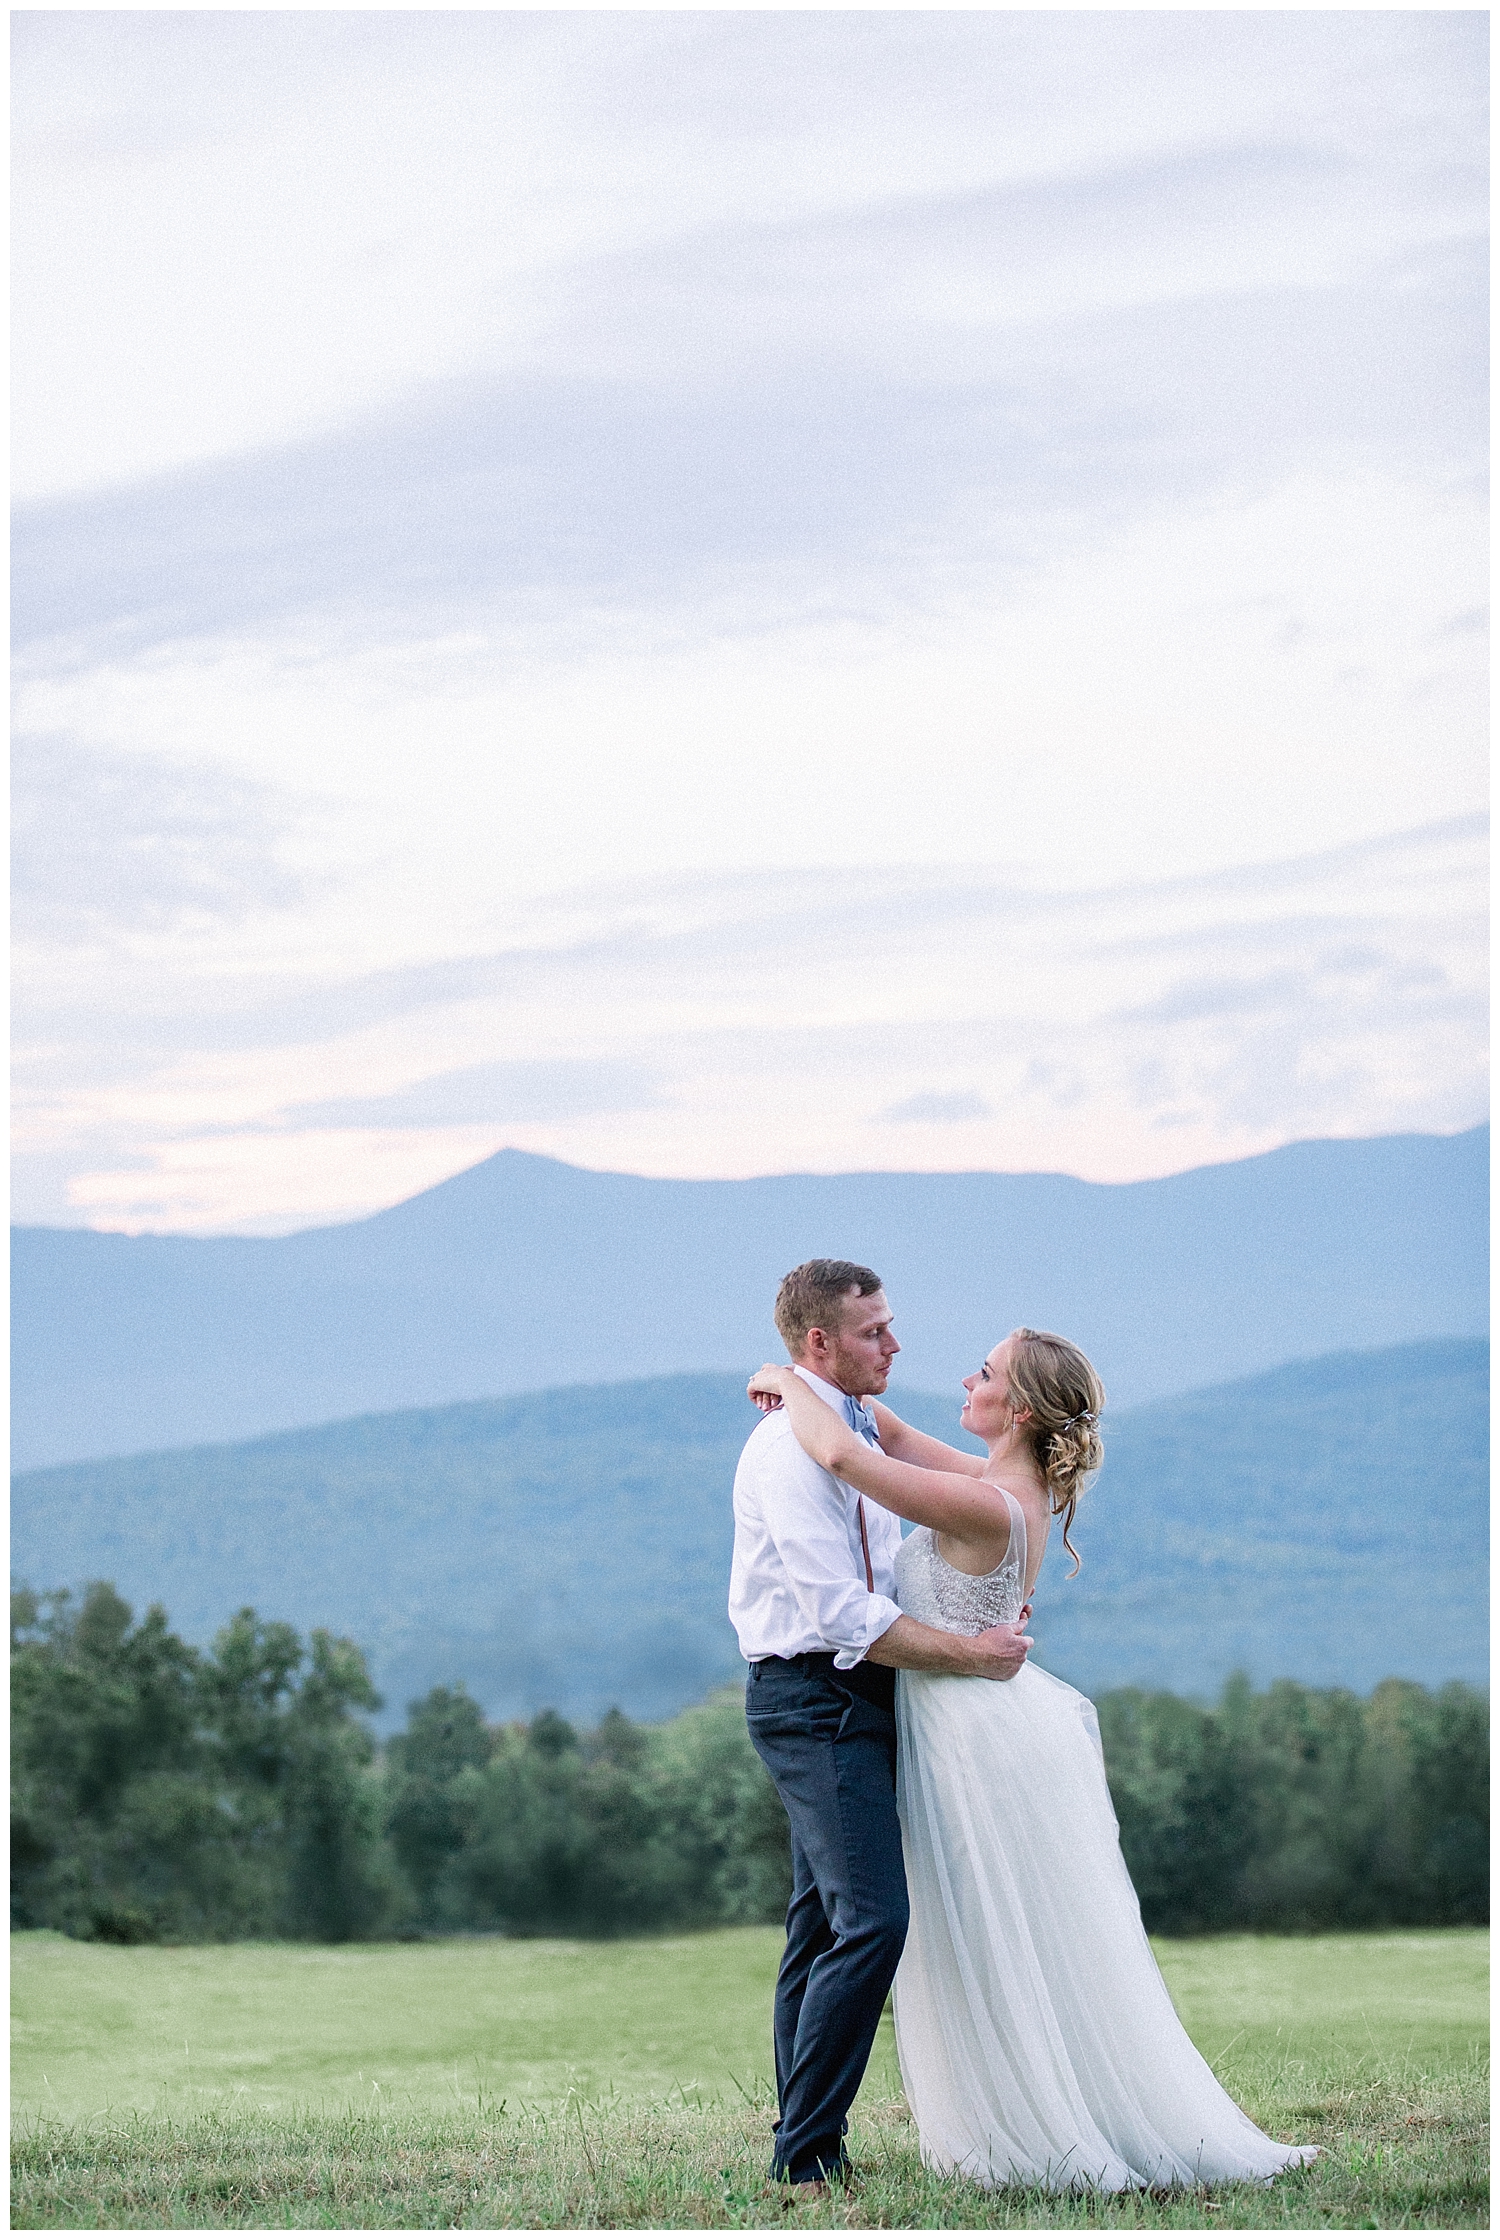 Sunset over Carrabassett Valley at a wedding. Sugarloaf Mountain Resort Wedding in Maine, photos by Halie Olszowy.